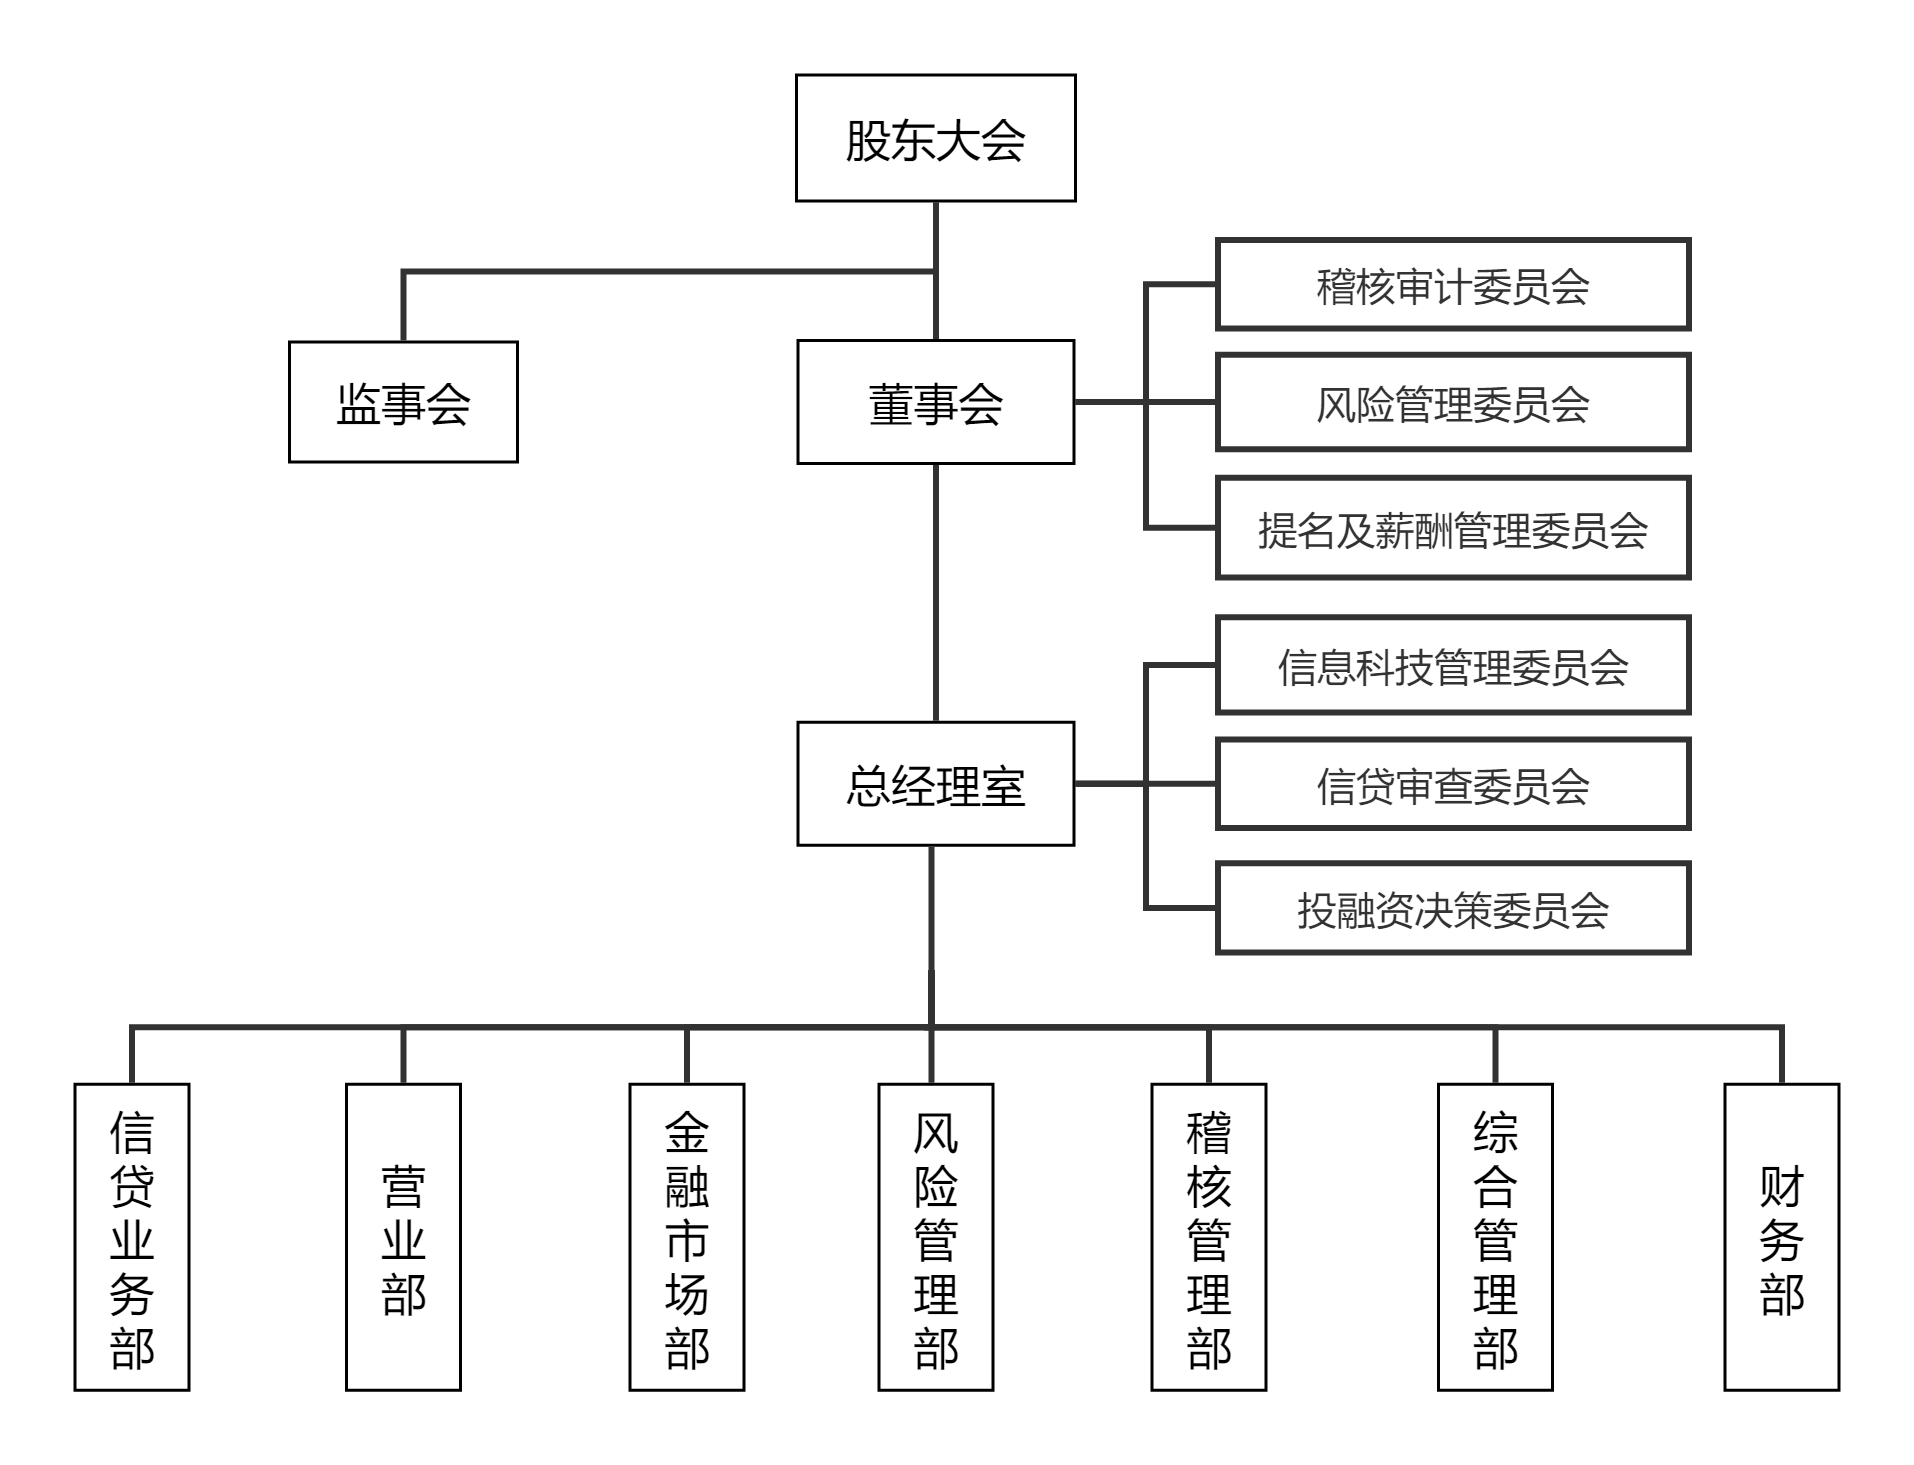 财务公司组织结构图.png